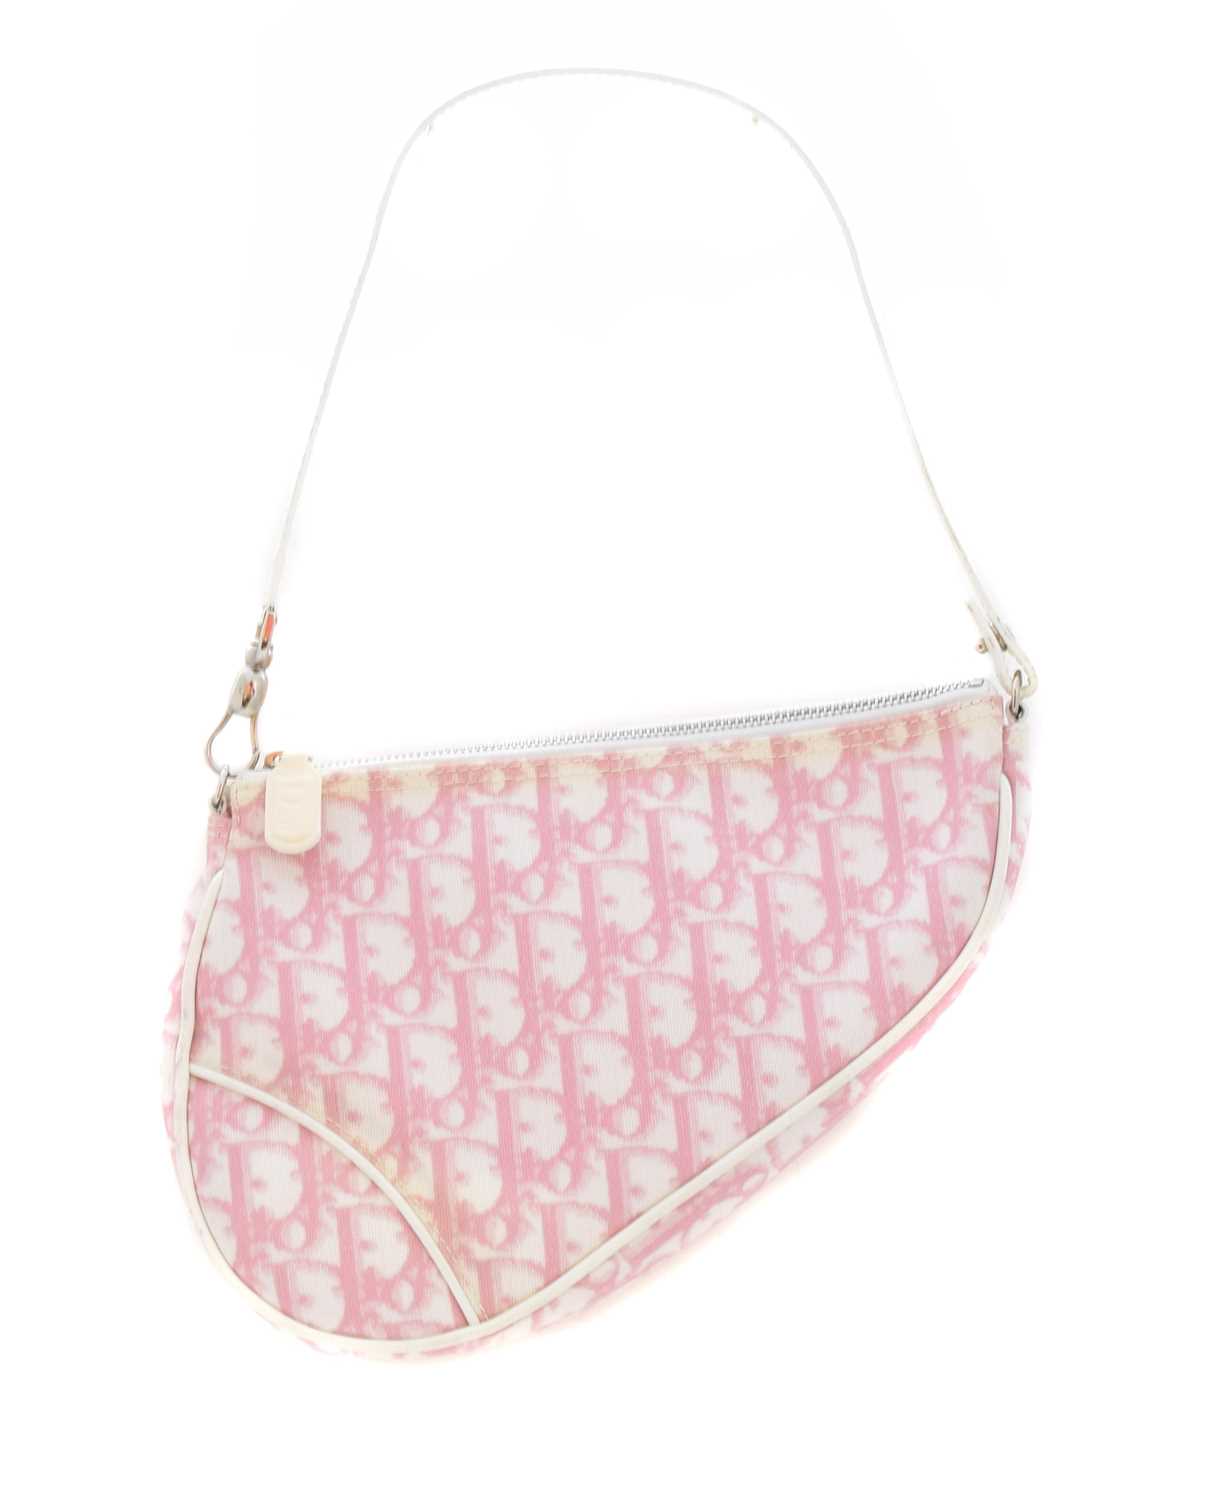 A Dior Saddle Pouch Handbag,